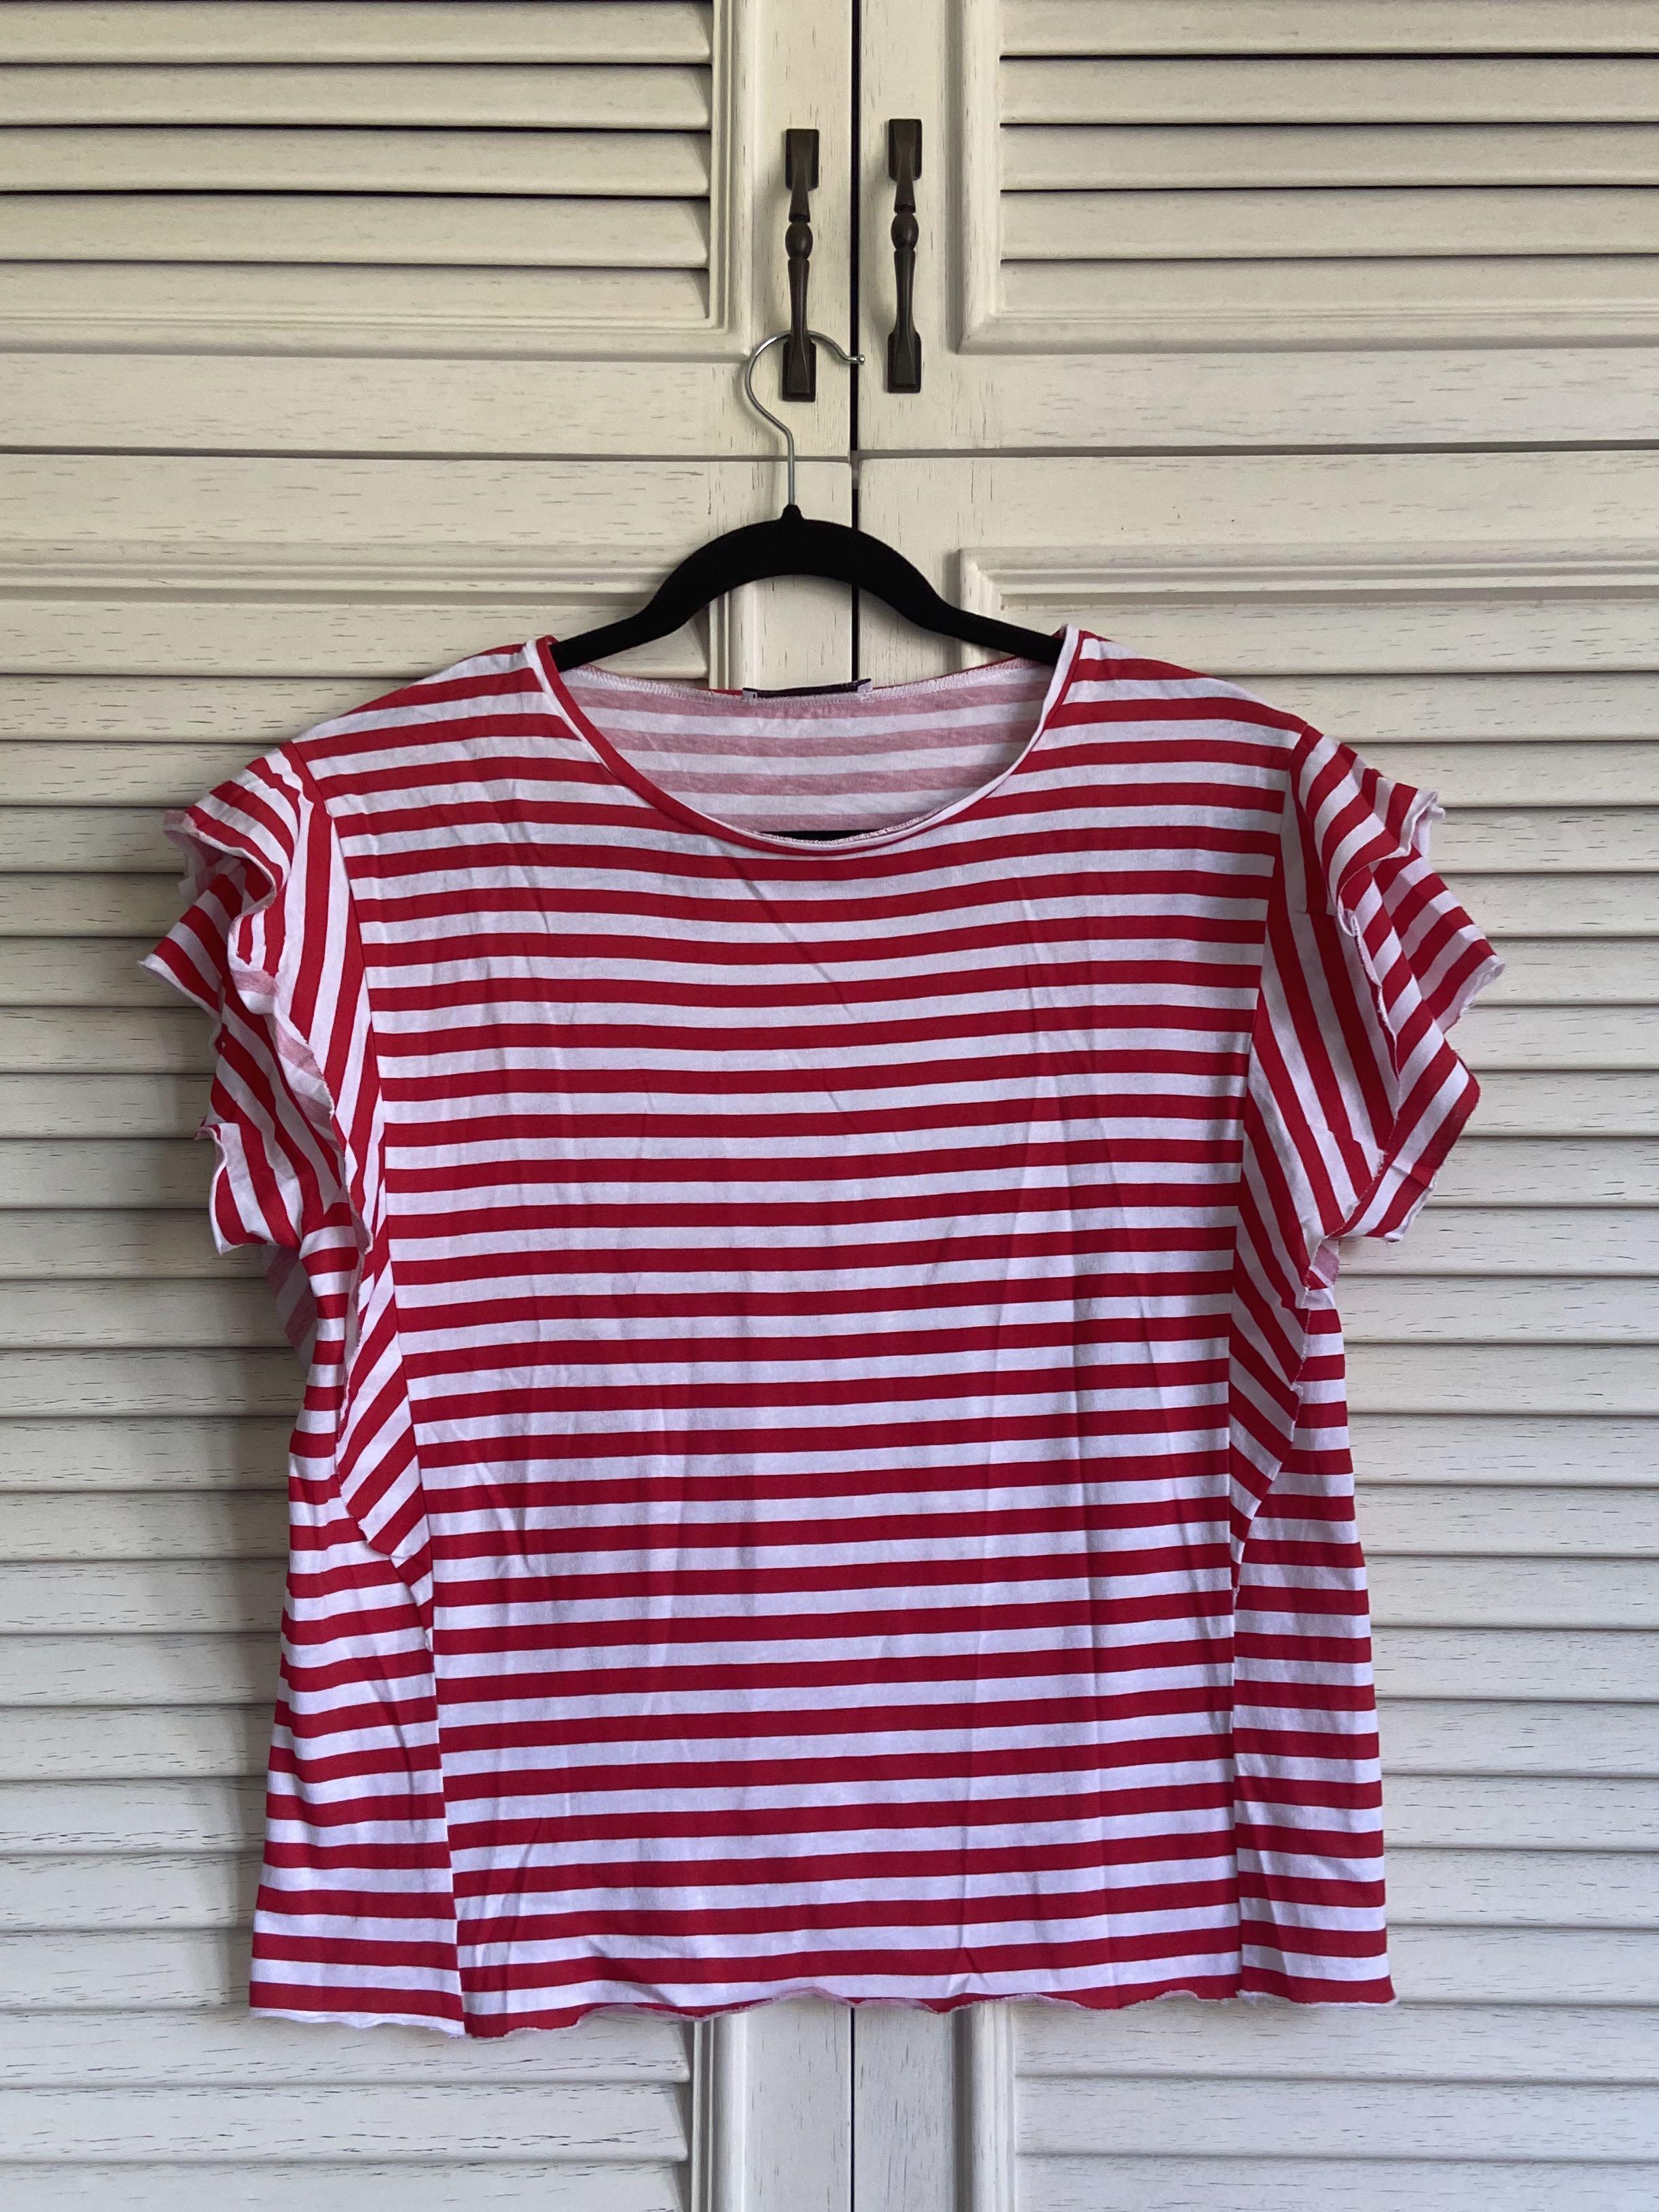 zara red and white striped shirt